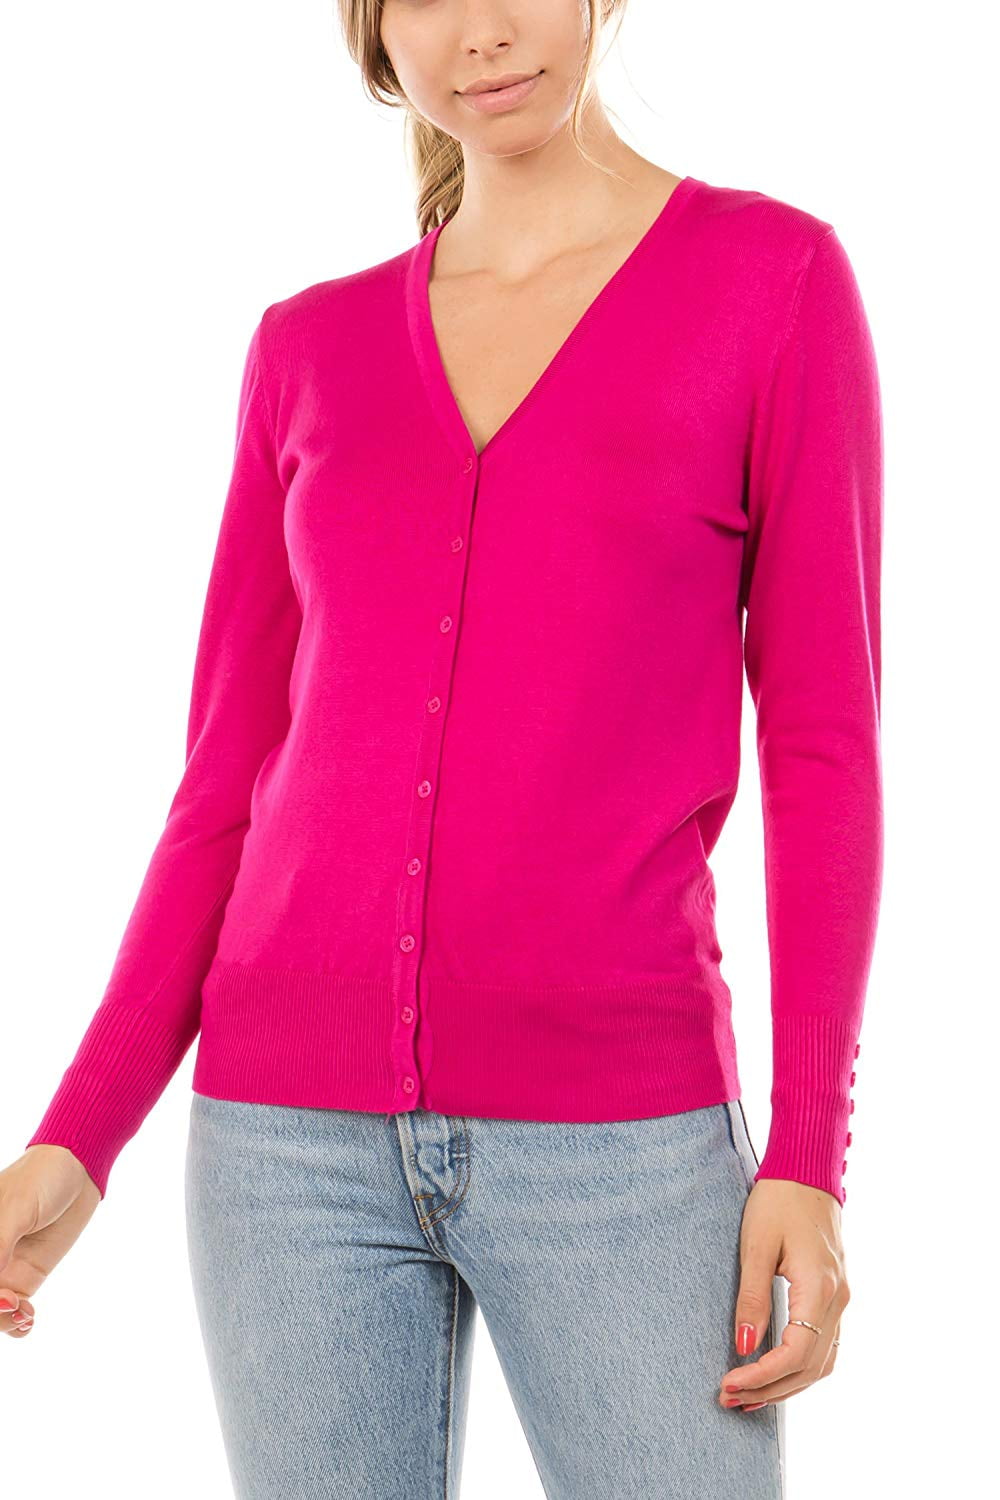 VIISHOW Womens V Neck Button Down Knitwear Long Sleeve Soft Basic Knit Cardigan Sweater